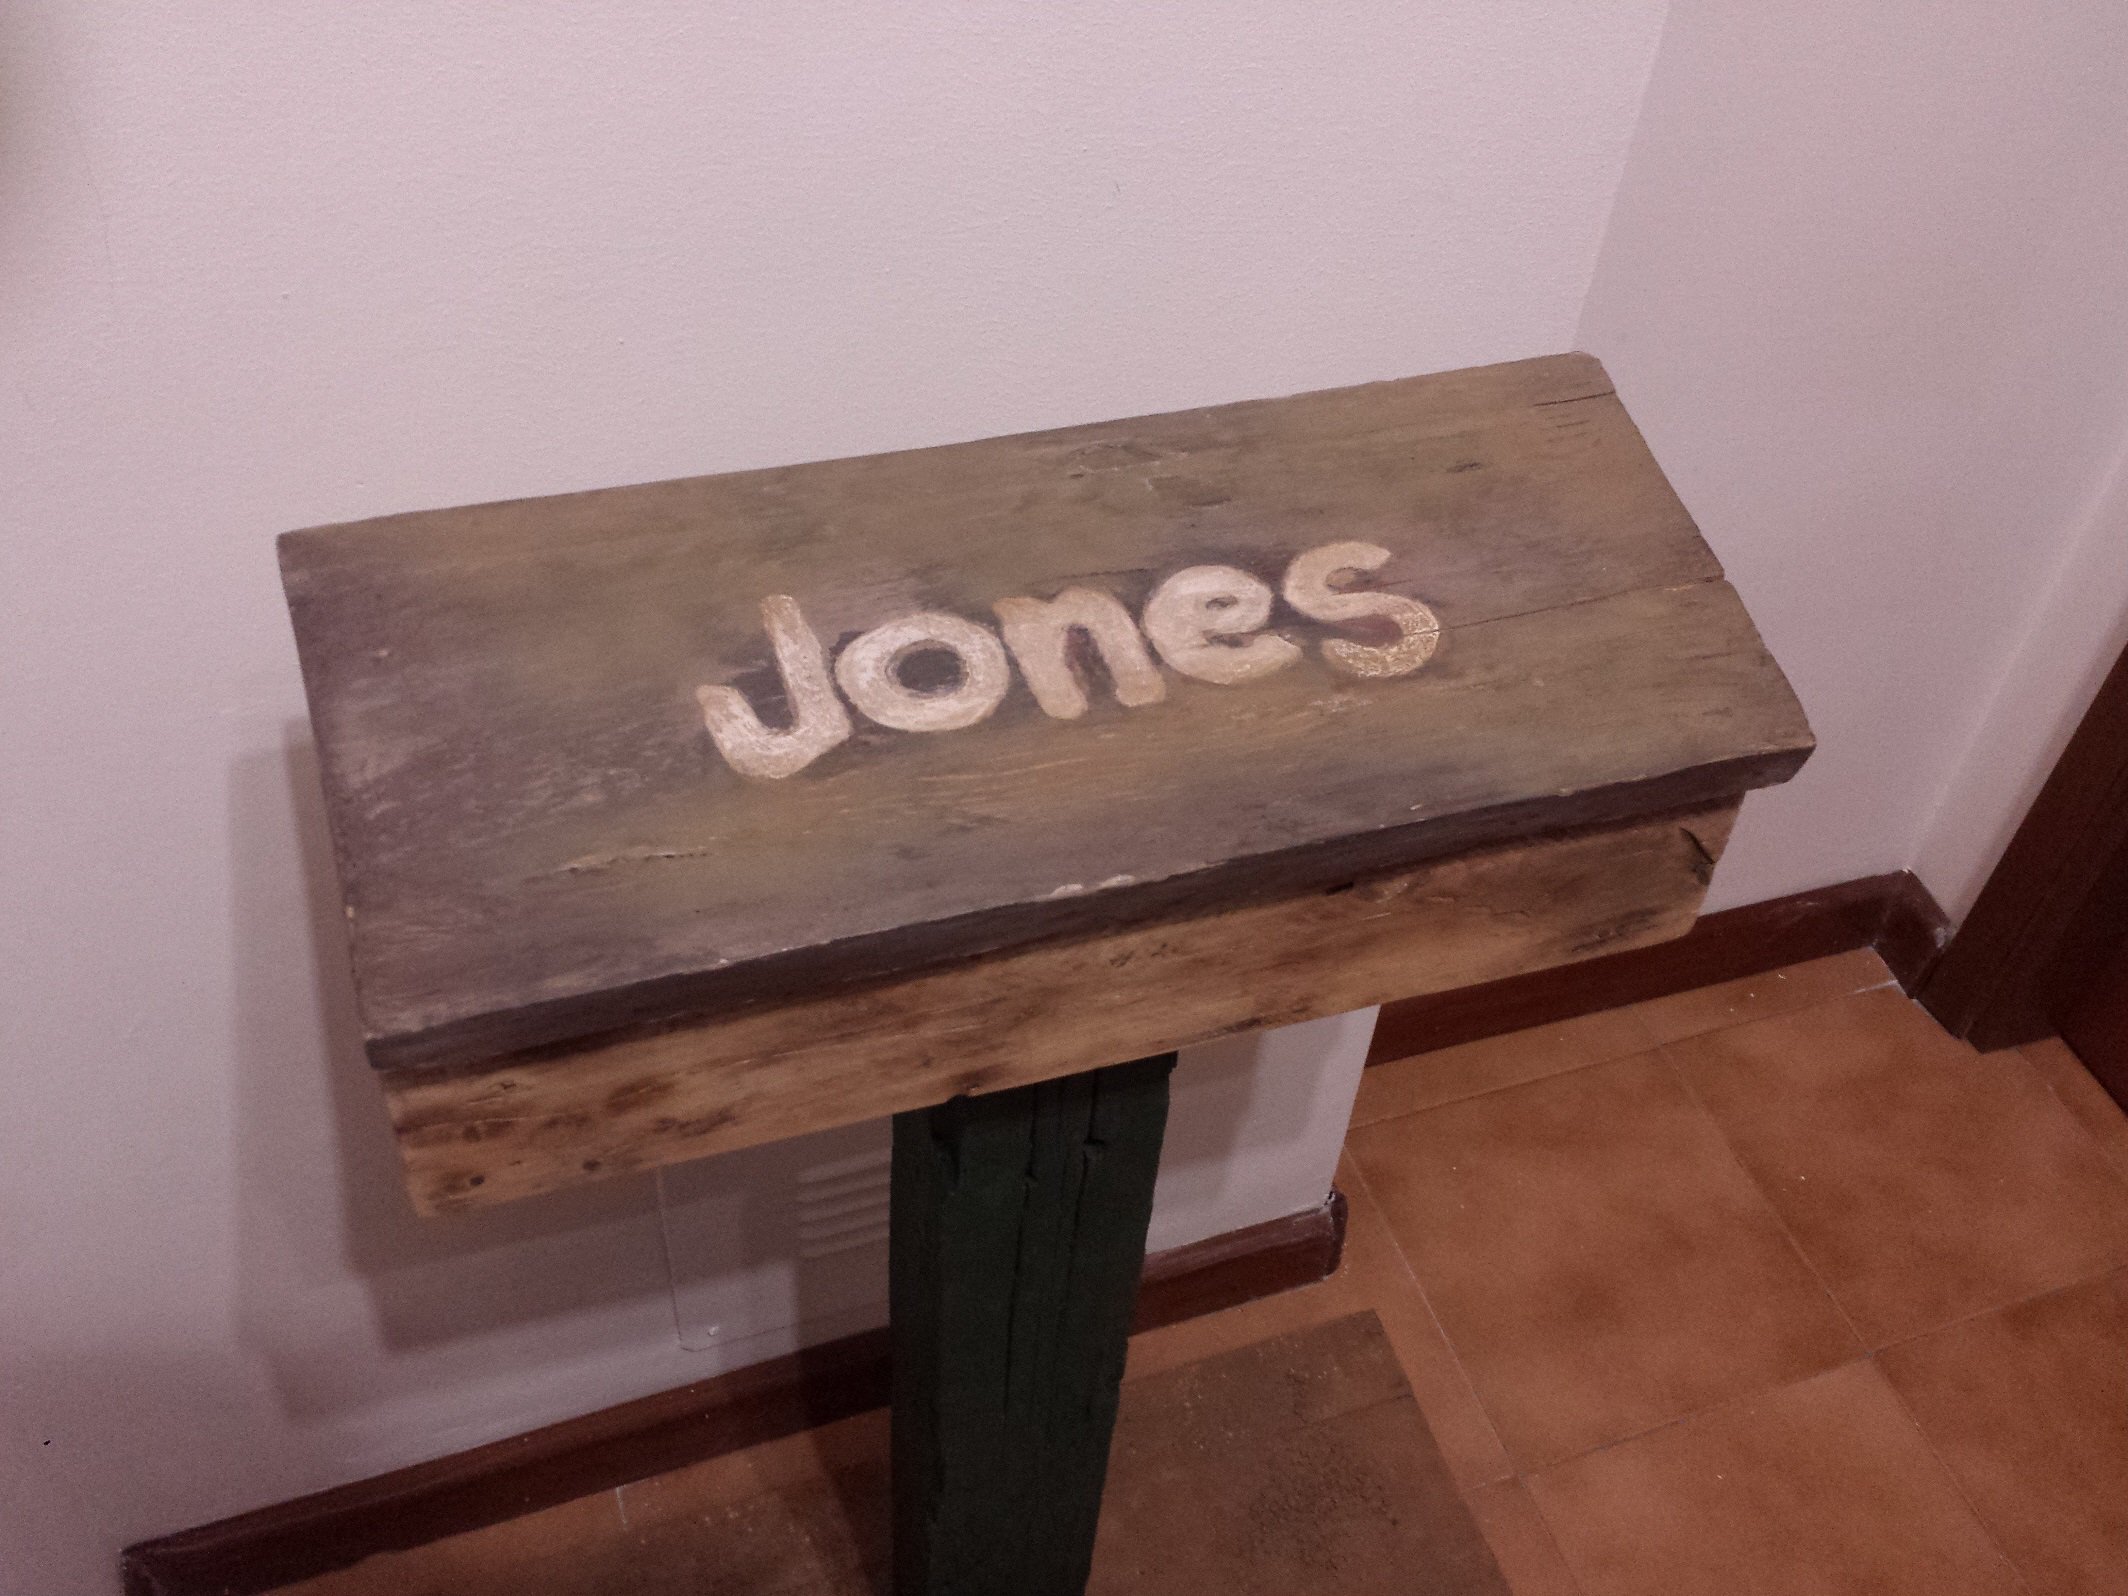 Jones Mailbox 02.jpeg